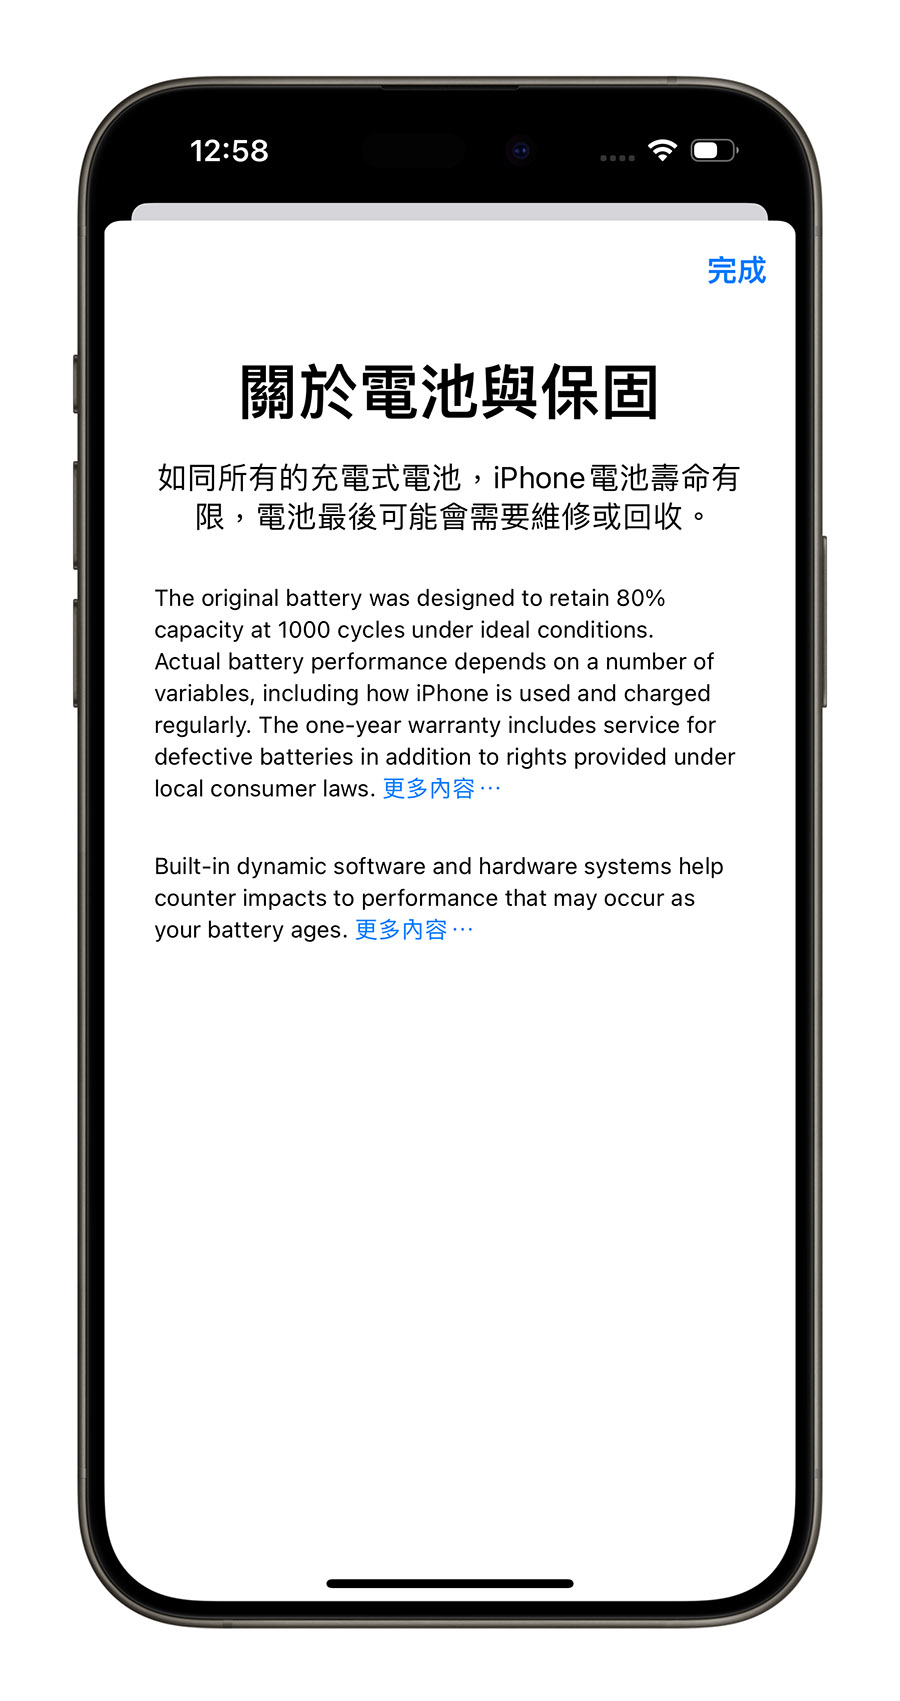 iOS 17.4 Beta 4 推出